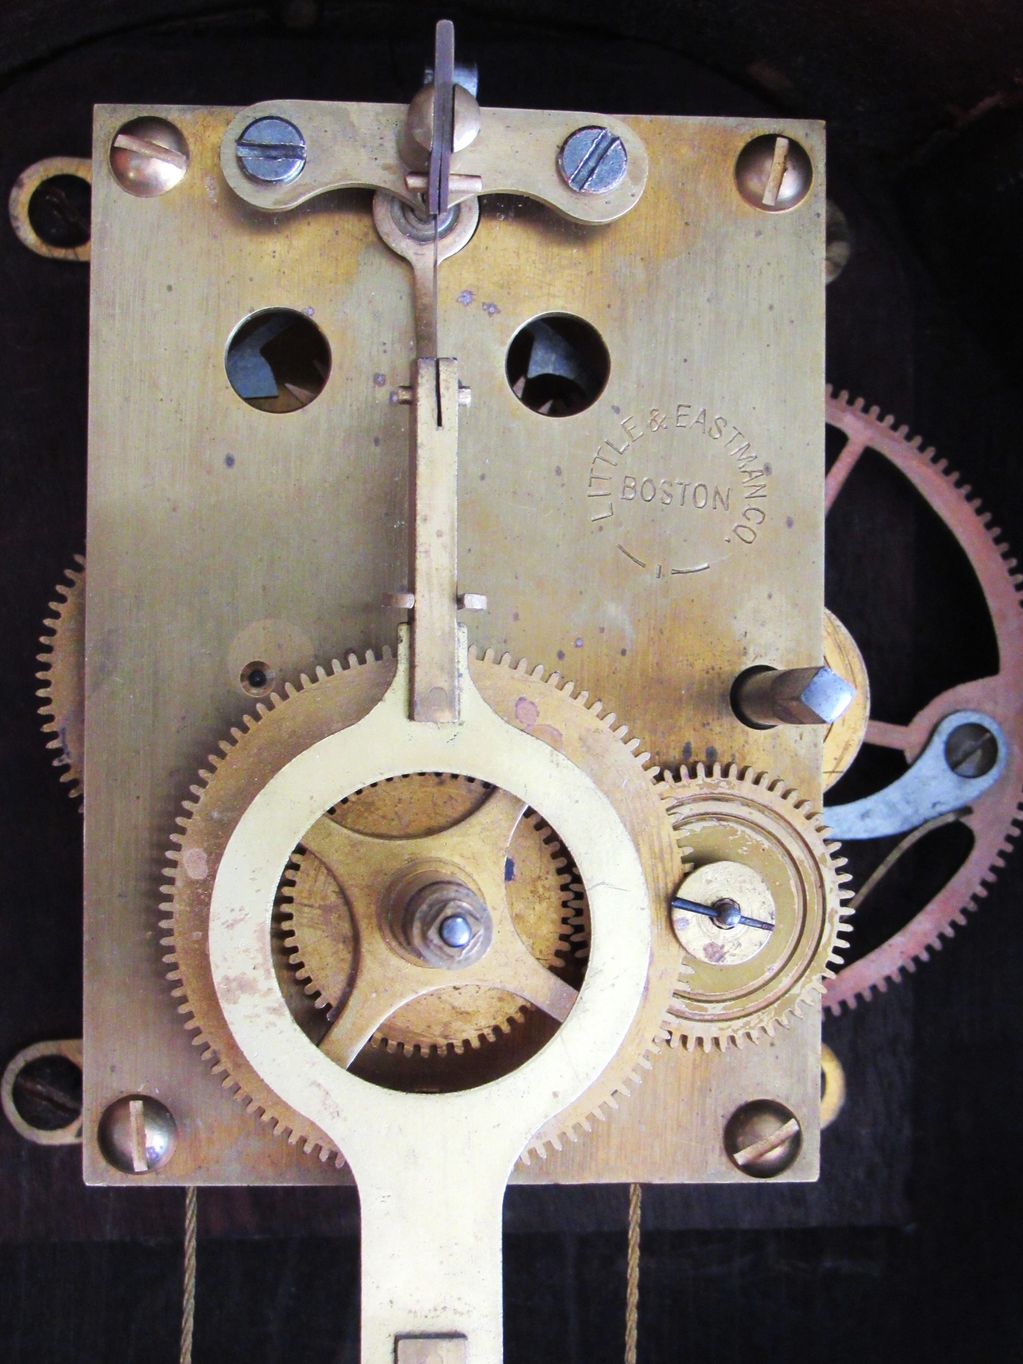 Joseph Eastman
Herschede Clock Co.
Little Eastman

Pompeo Clocks Auctions